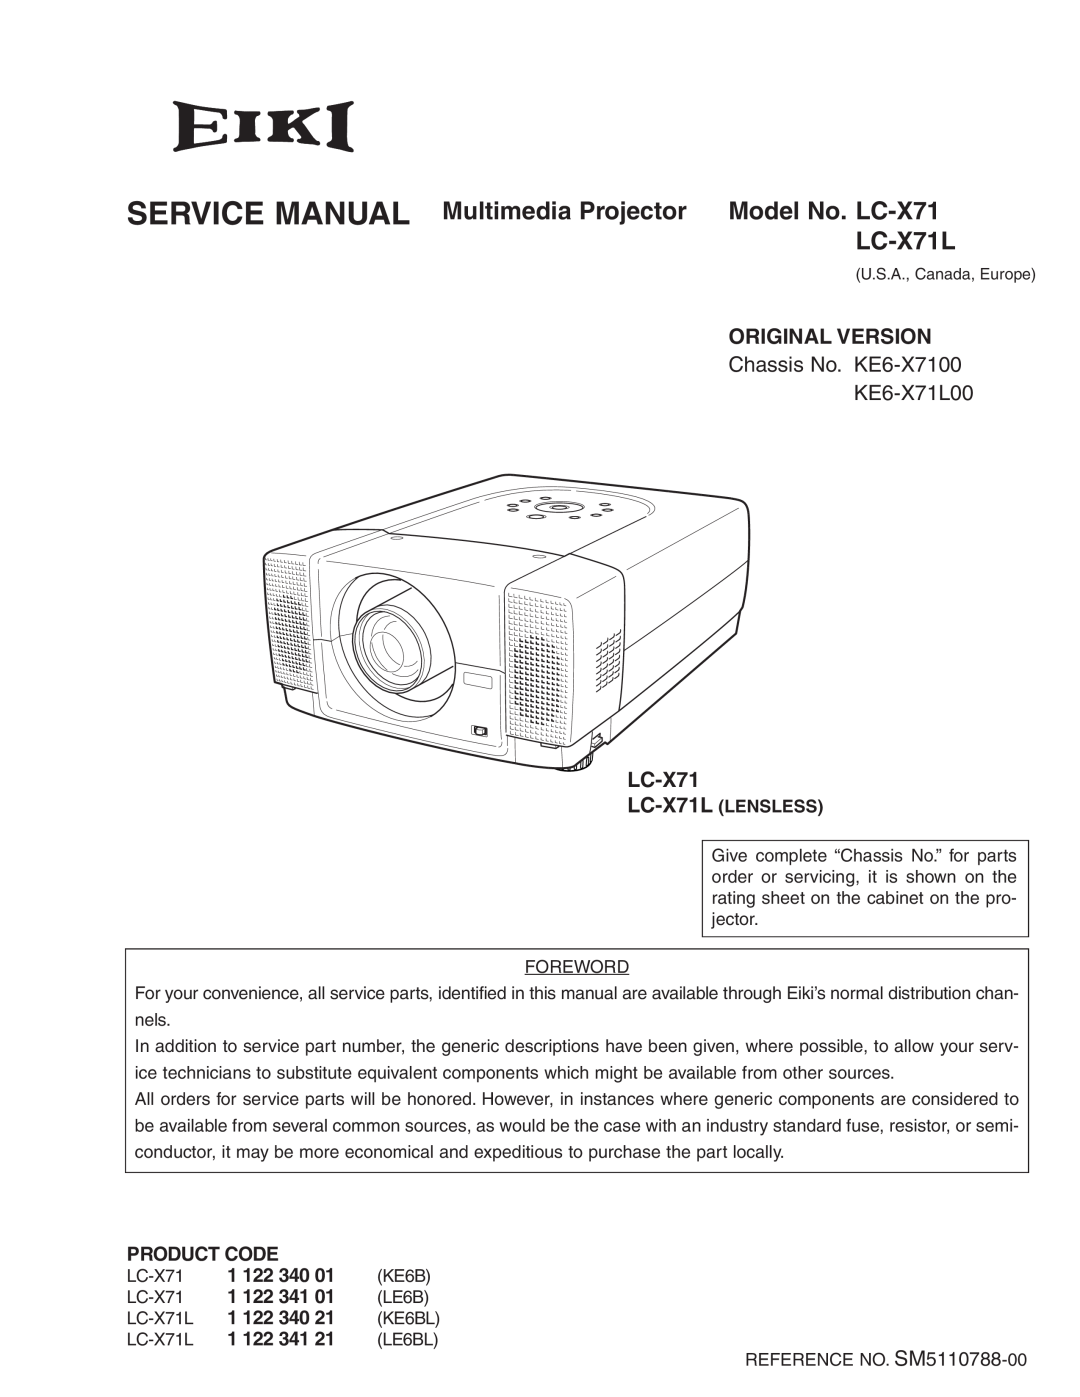 Eiki service manual SERVICE MANUAL Multimedia Projector Model No. LC-X71 LC-X71L, Chassis No. KE6-X7100 KE6-X71L00 